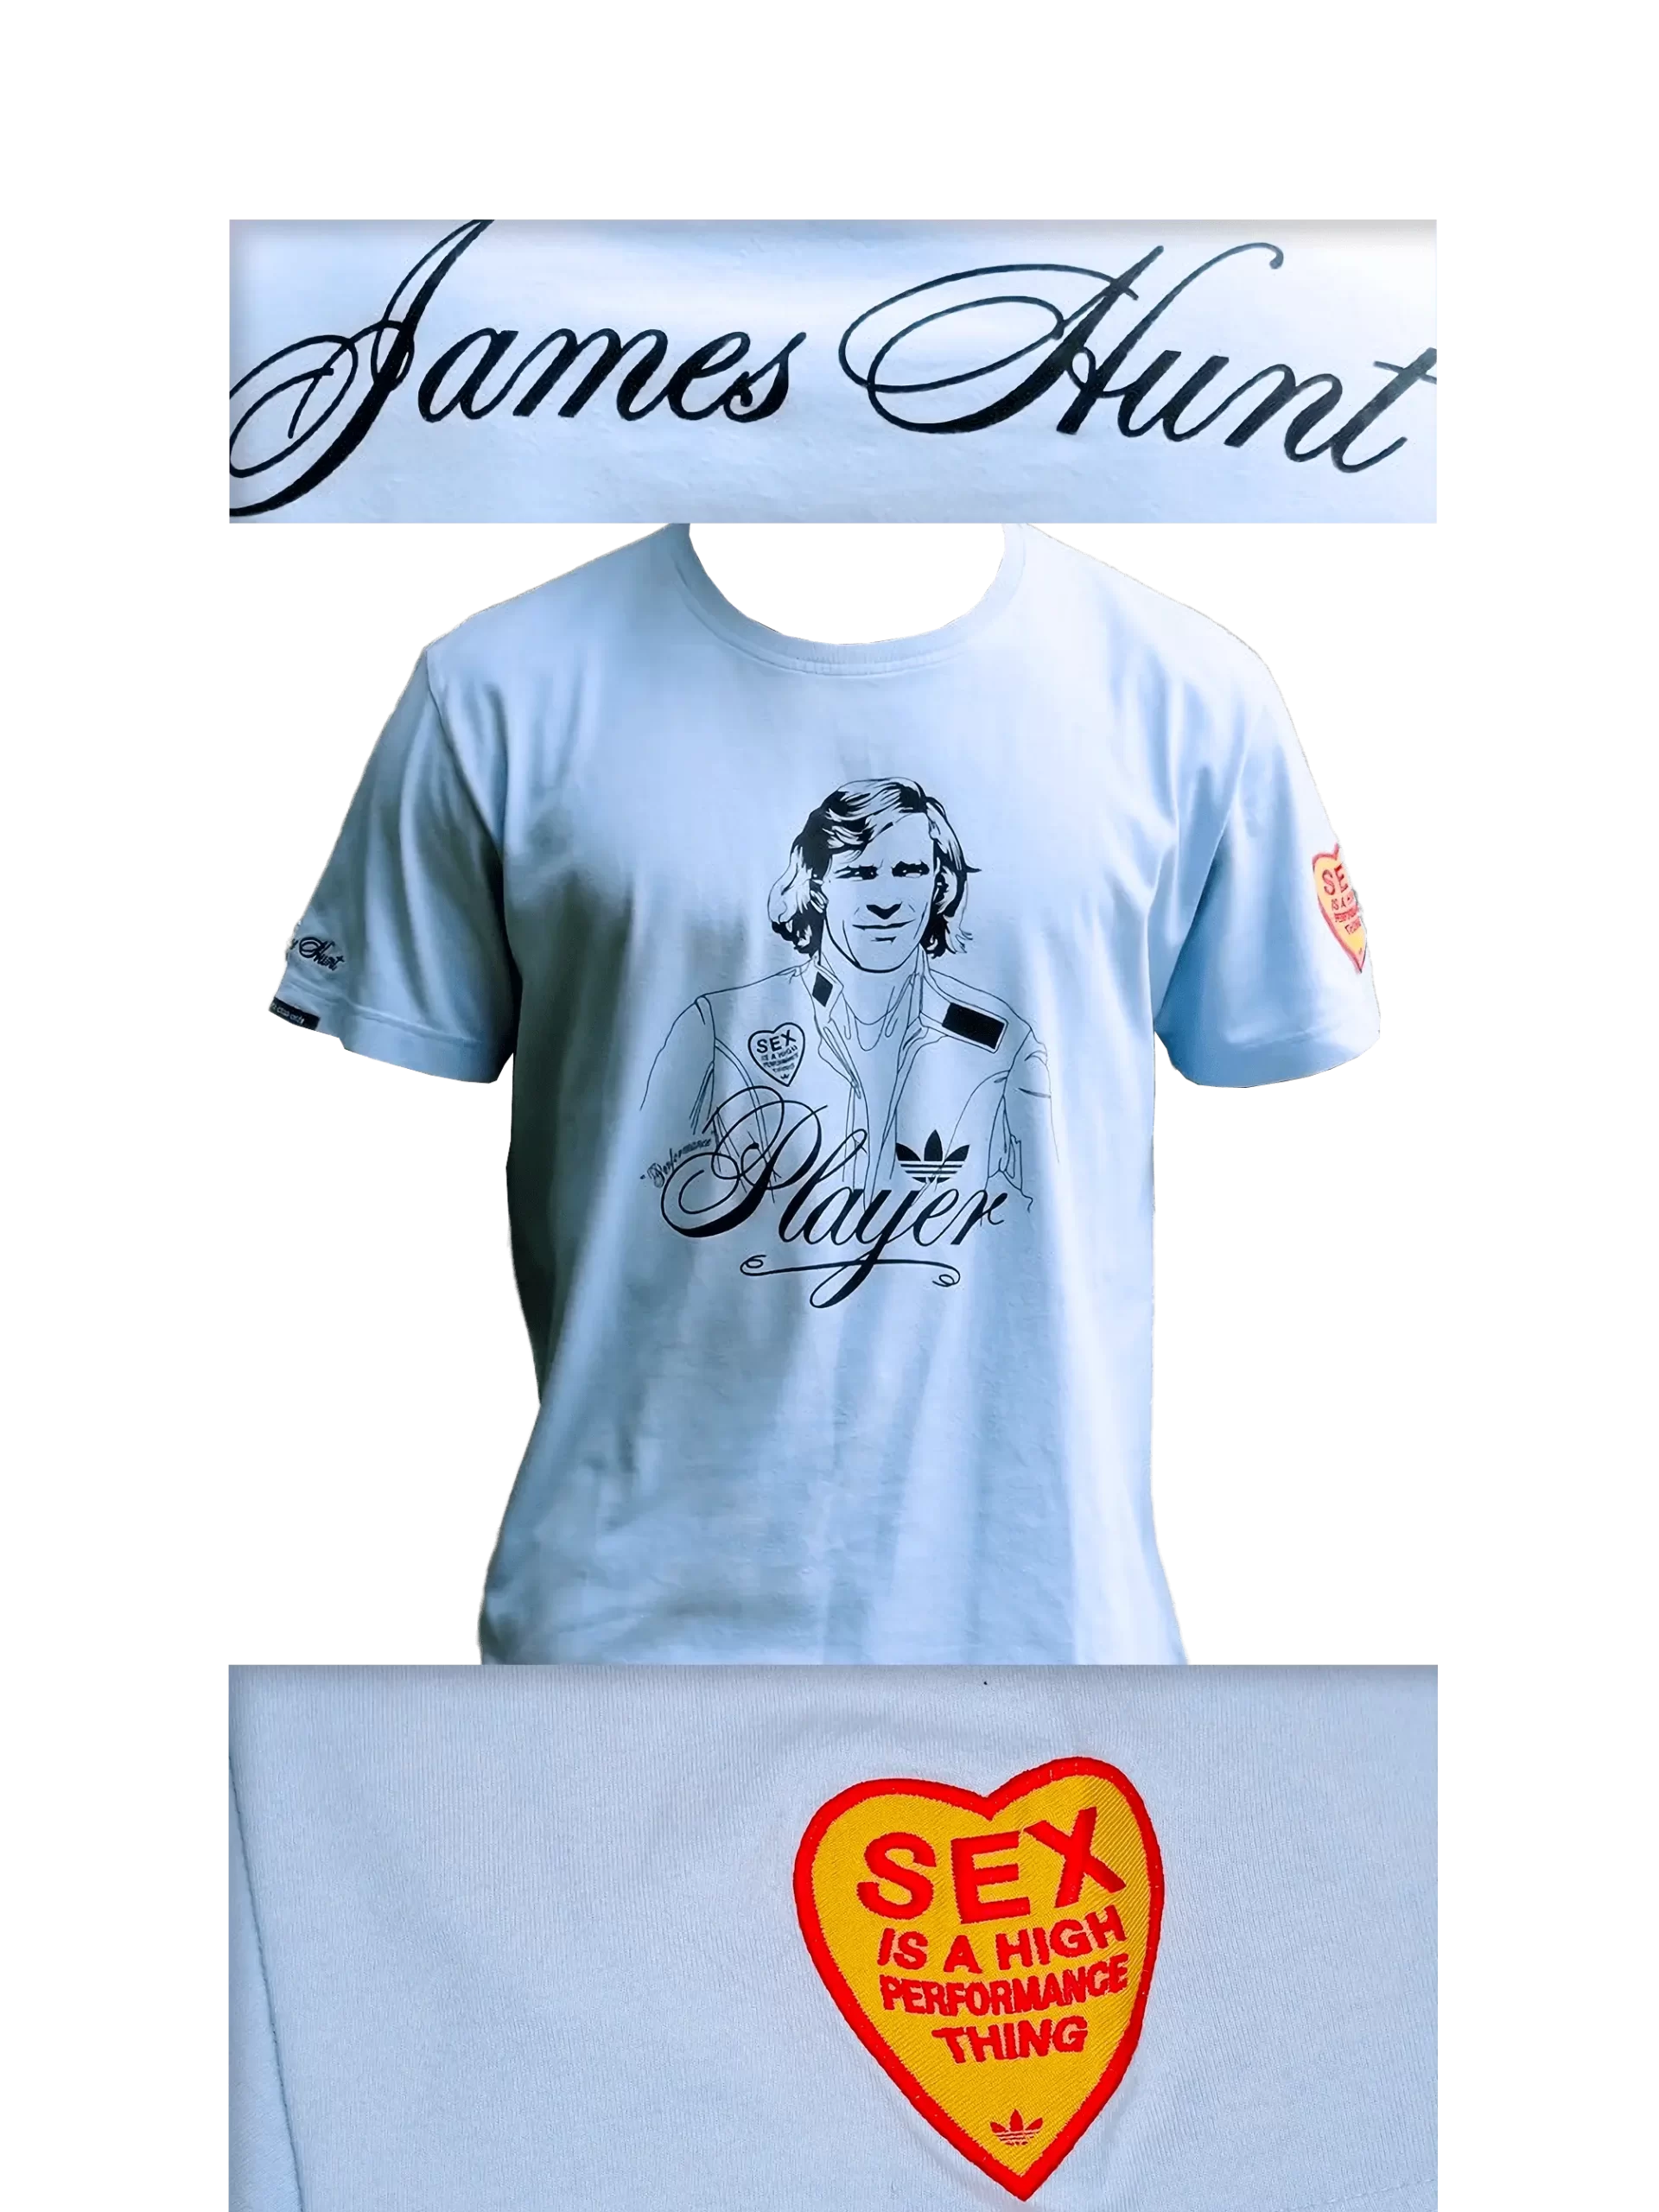 Men's 2006 James Hunt Player's Club T-Shirt by Adidas: Frisky (EnLawded.com file #lmchk83618ip2y125204kg9st)